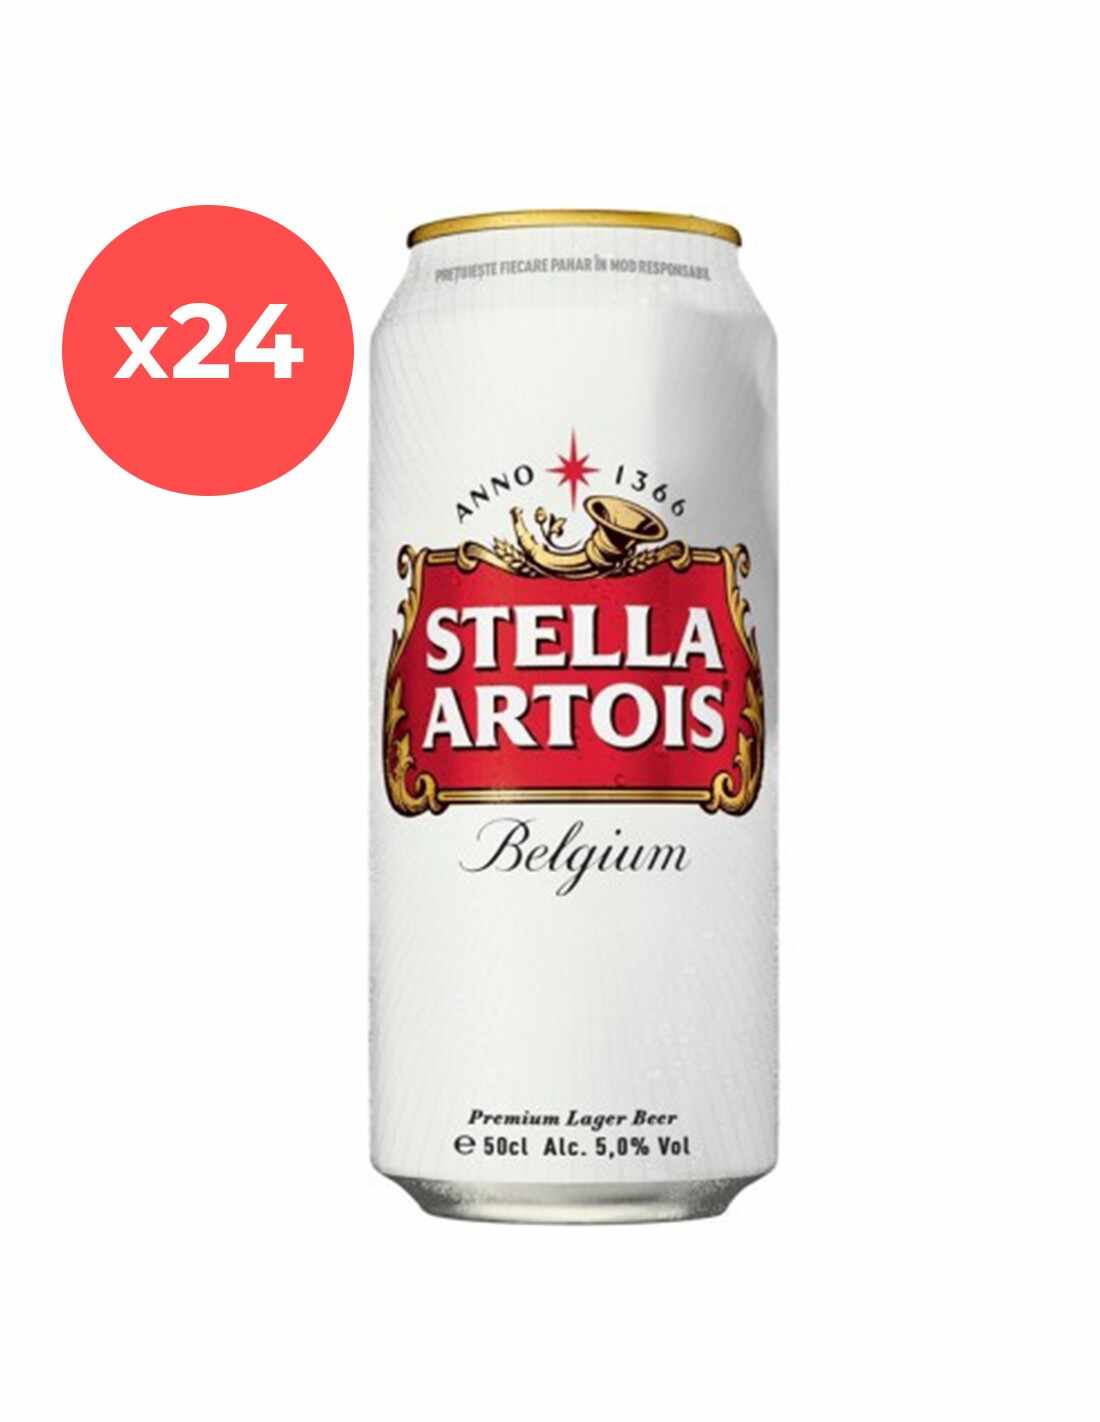 Bax 24 bucati bere blonda Stella Artois, 5% alc., 0.5L, doza, Romania